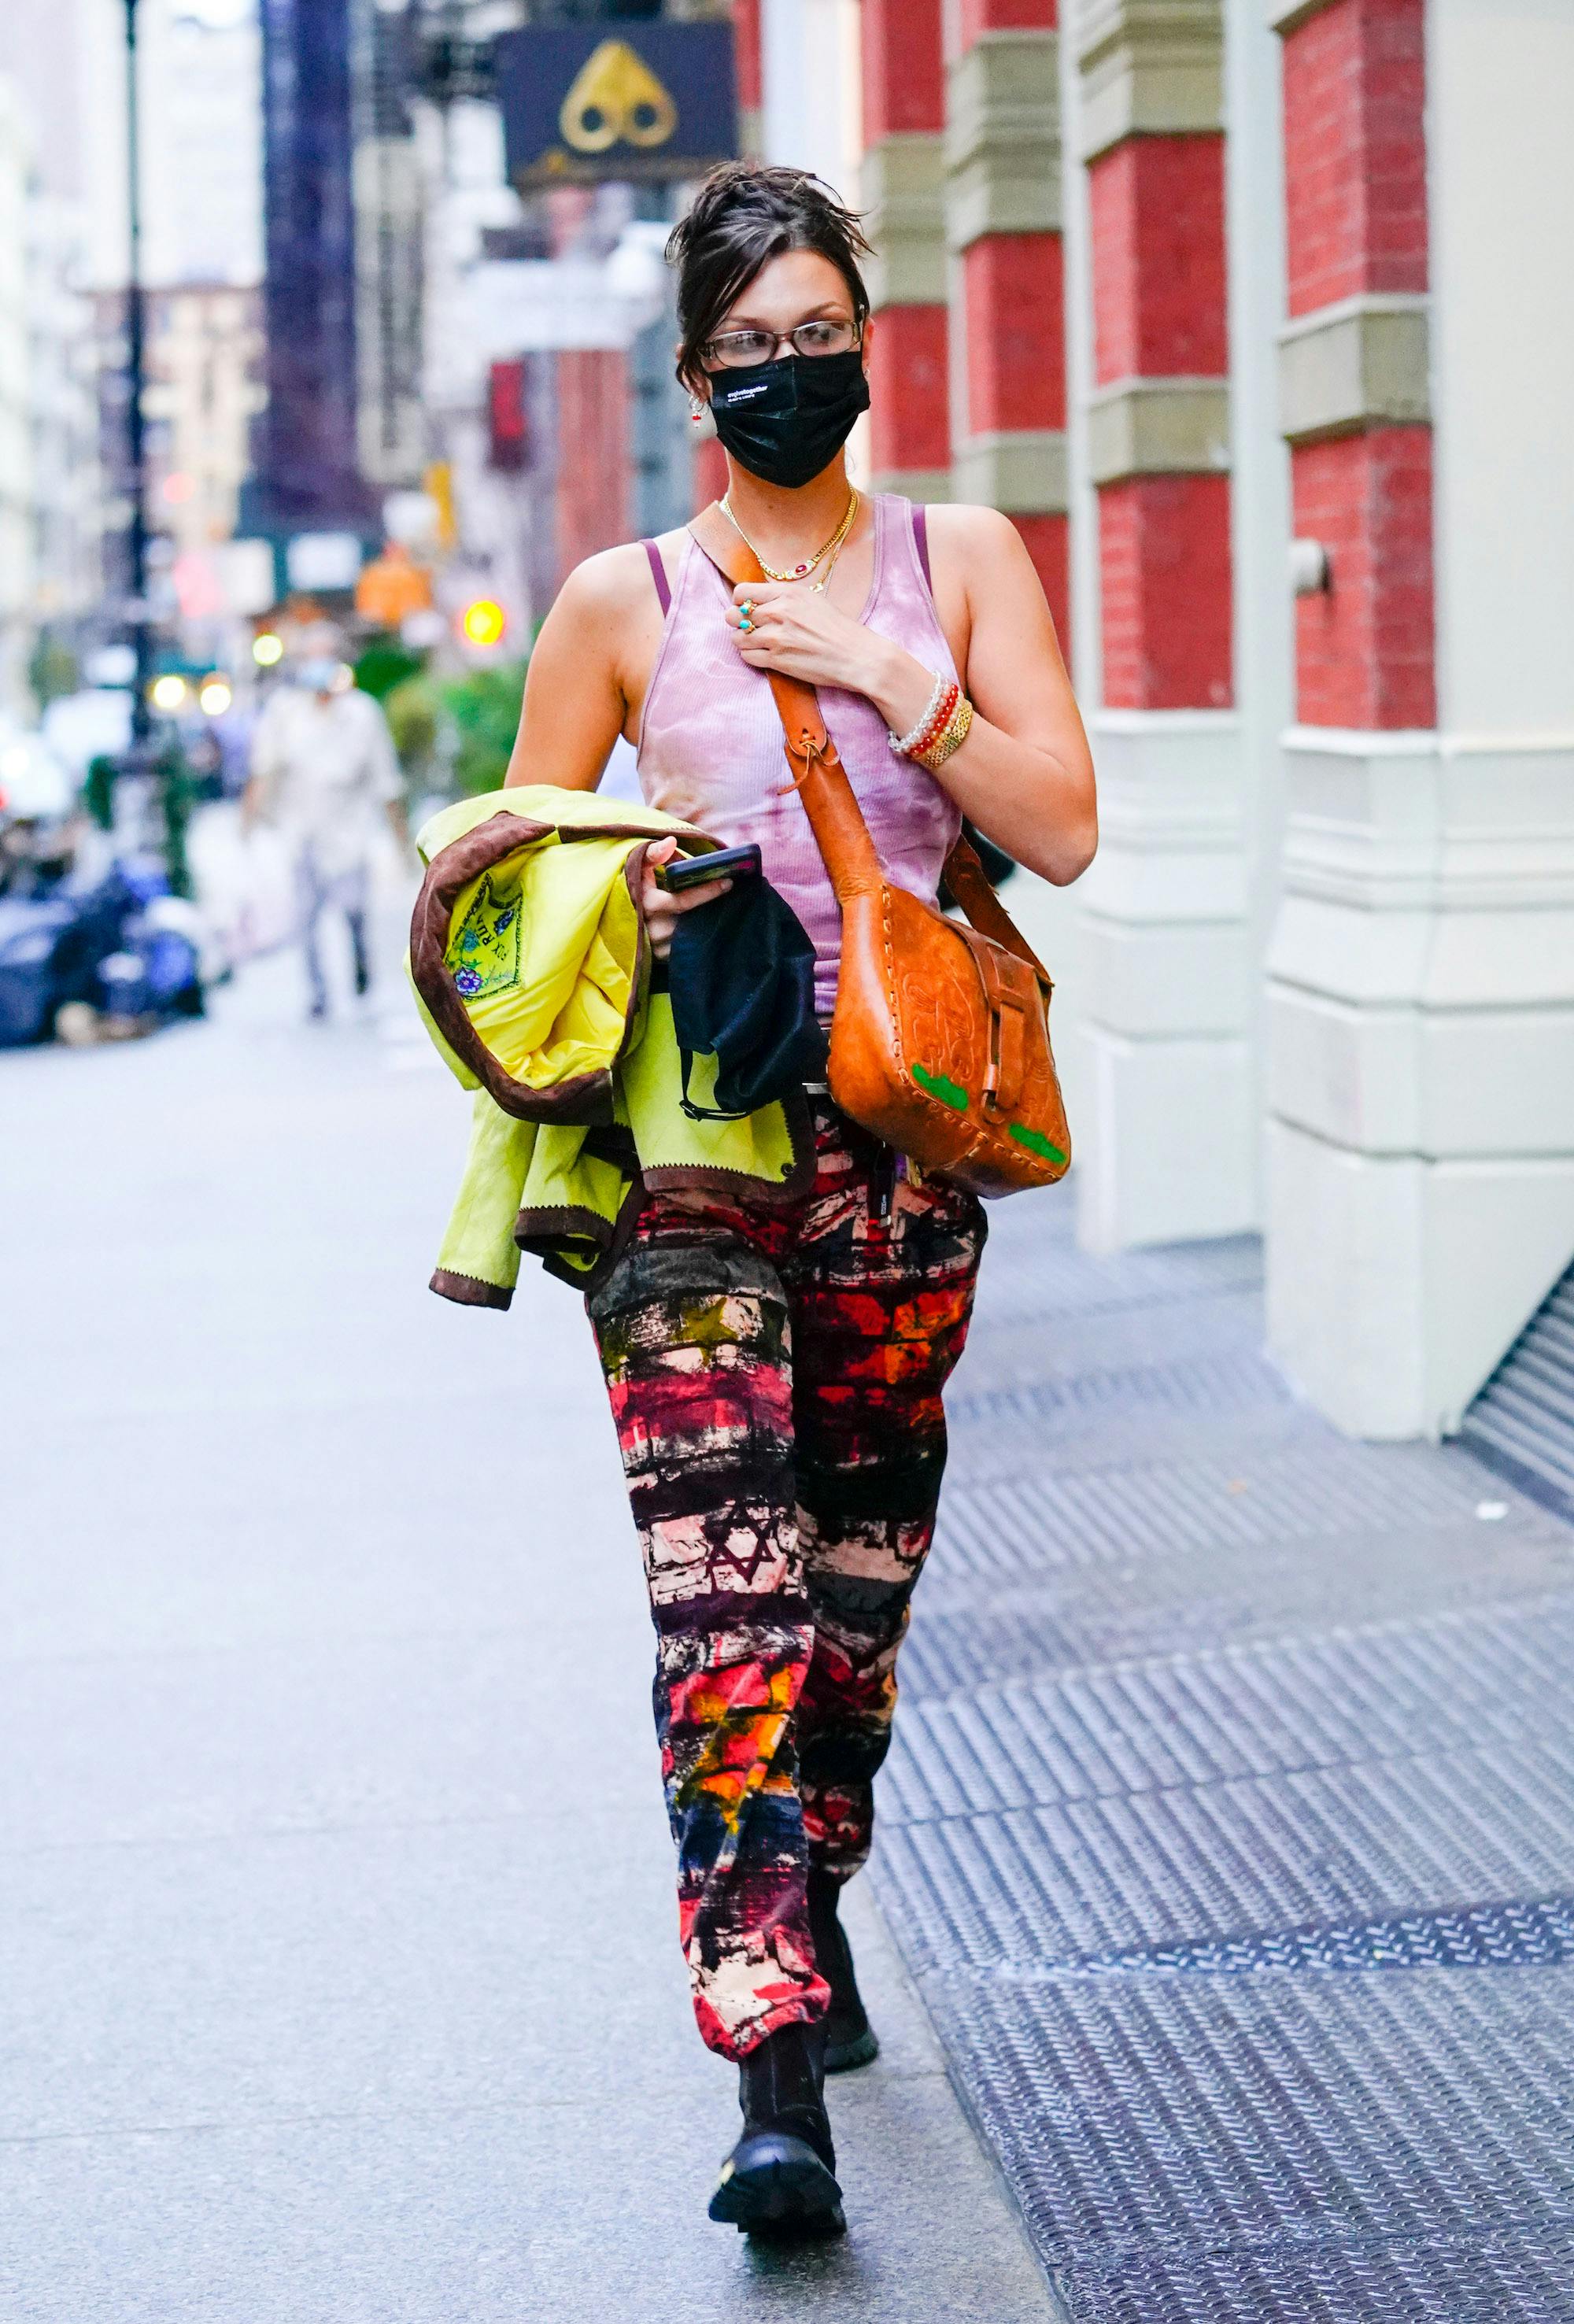 Prada hobo bag  Street style bags, Outfits, Fashion